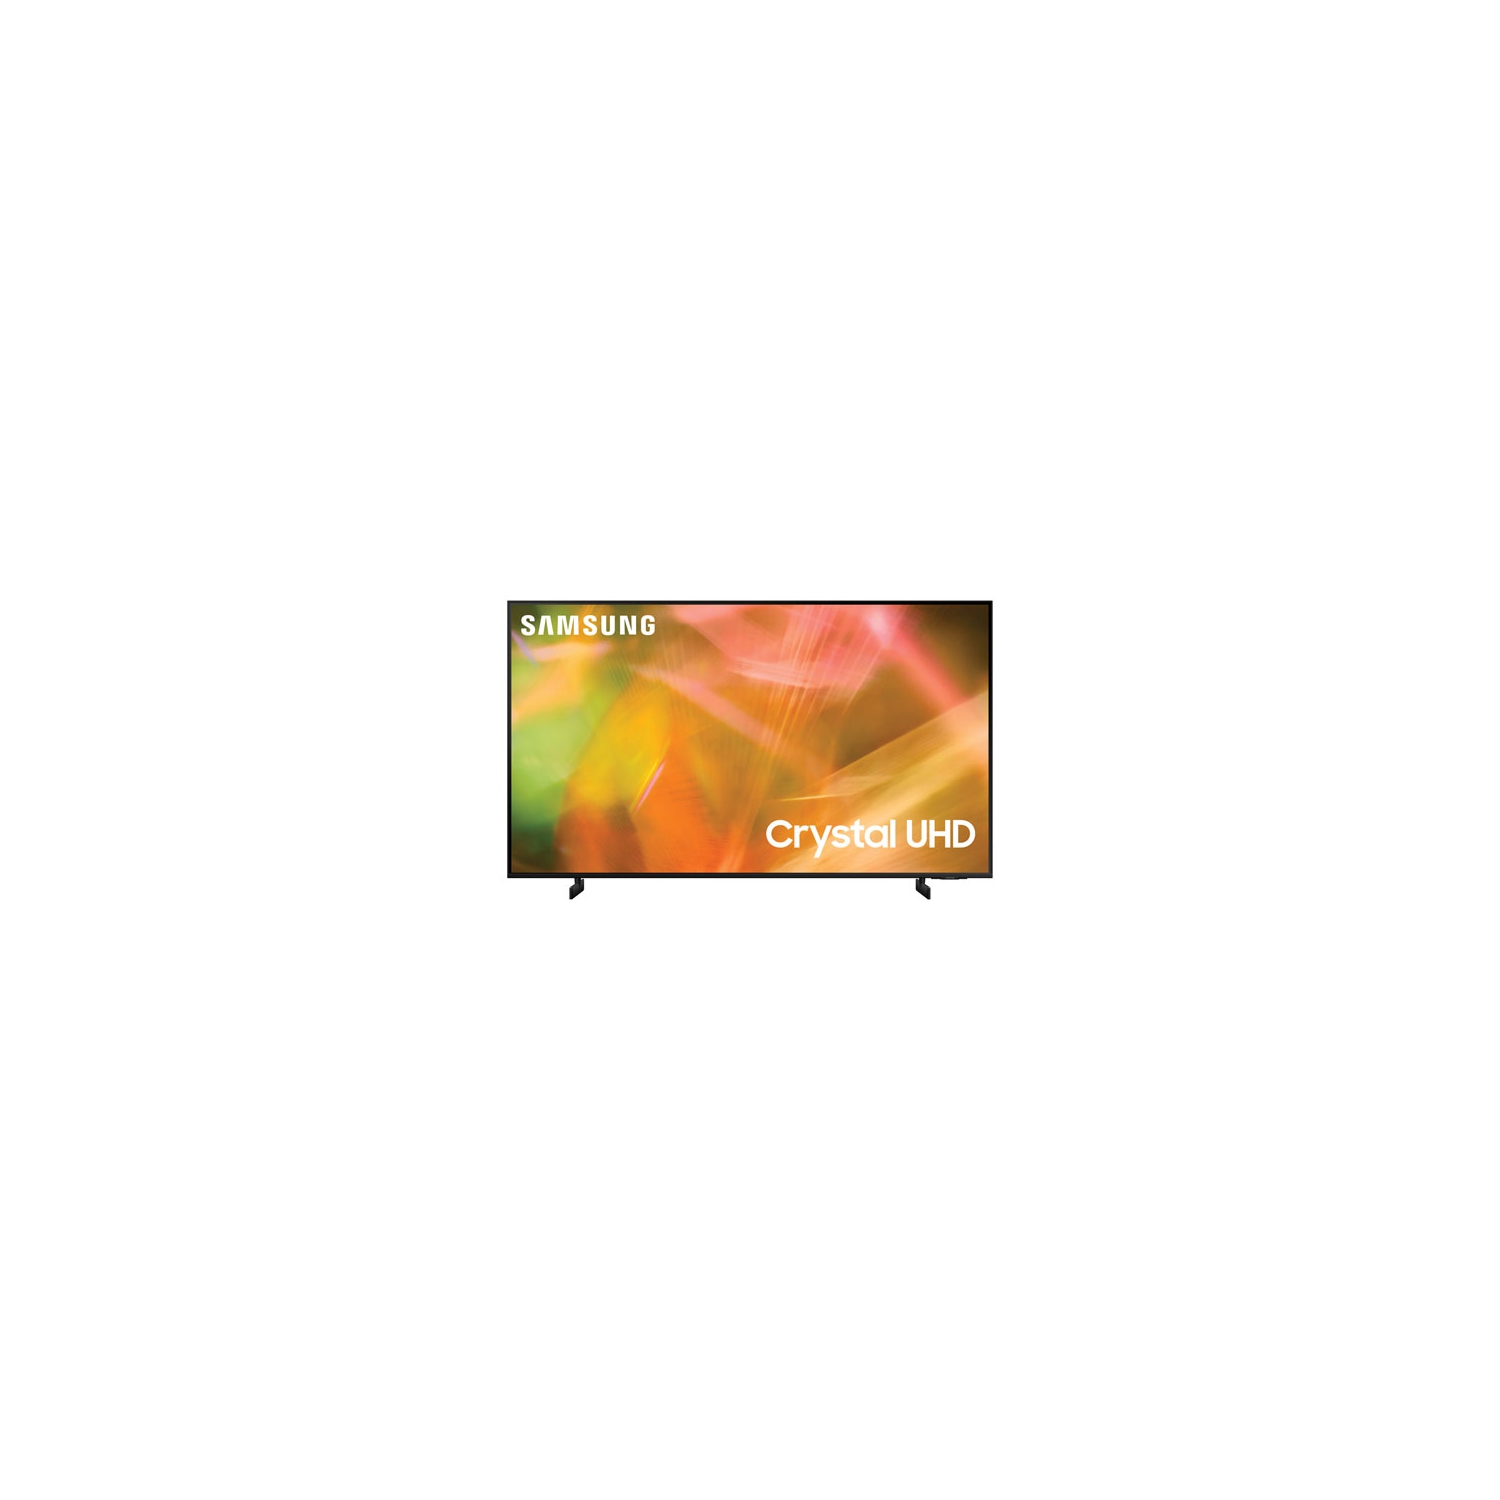 Samsung 50" Crystal UHD 4K Smart TV AU8000 (UN50AU8000) Brand New Open Box With One Year Samsung Warranty